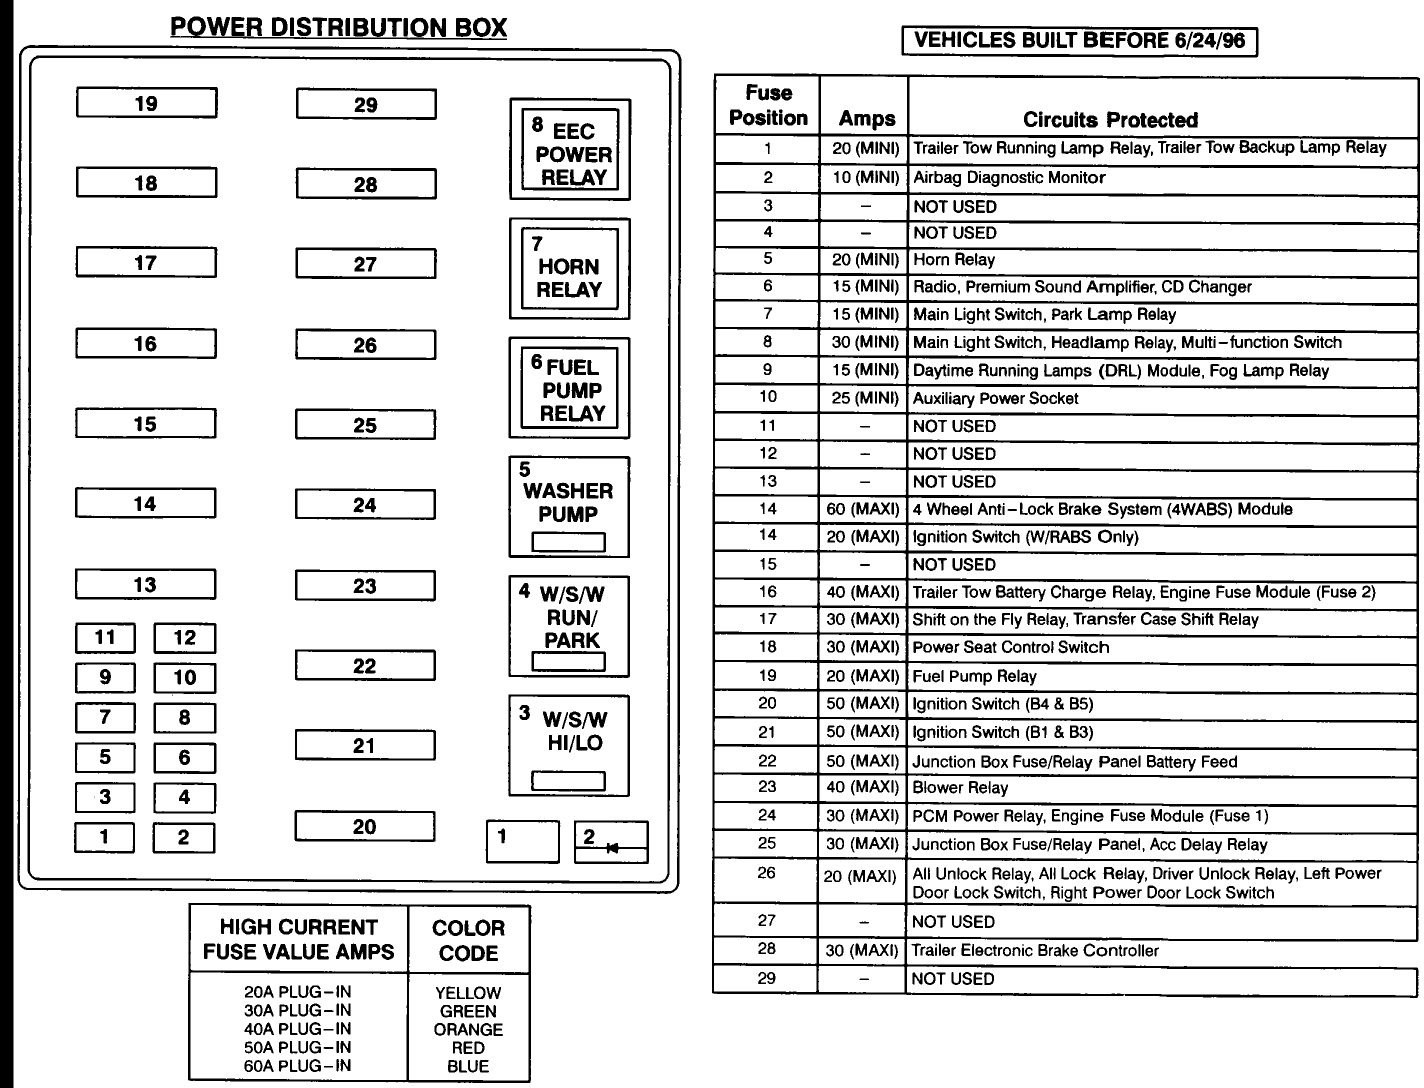 1997 Ford F150 Wiring Diagram from motogurumag.com